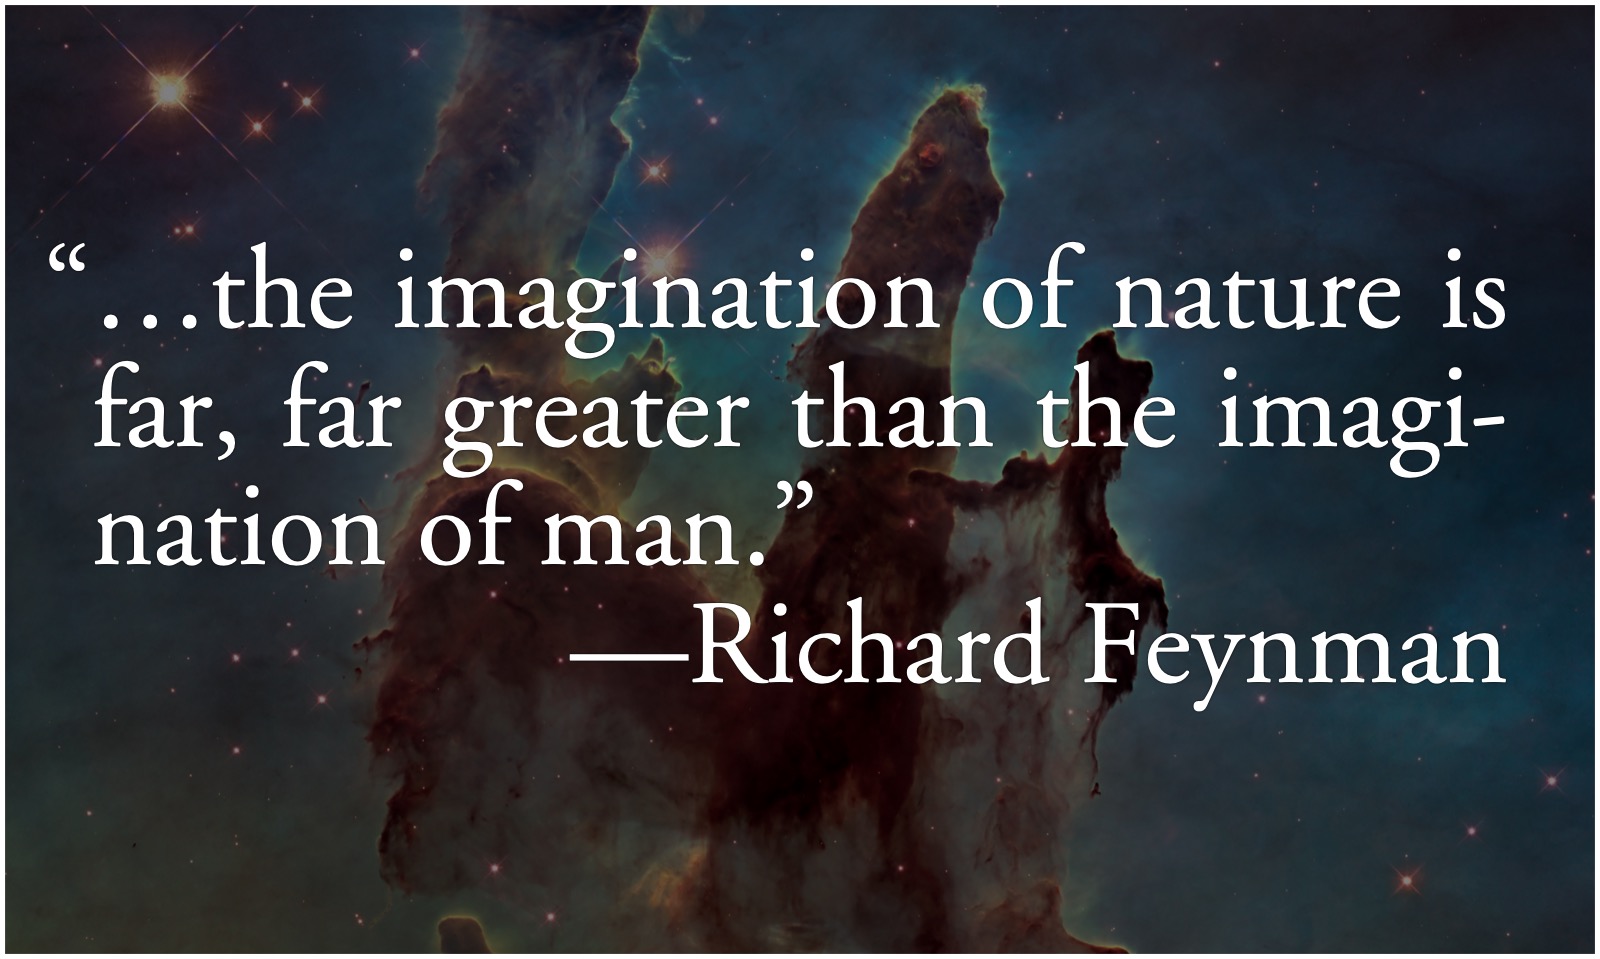 Feynman: Imagination of nature